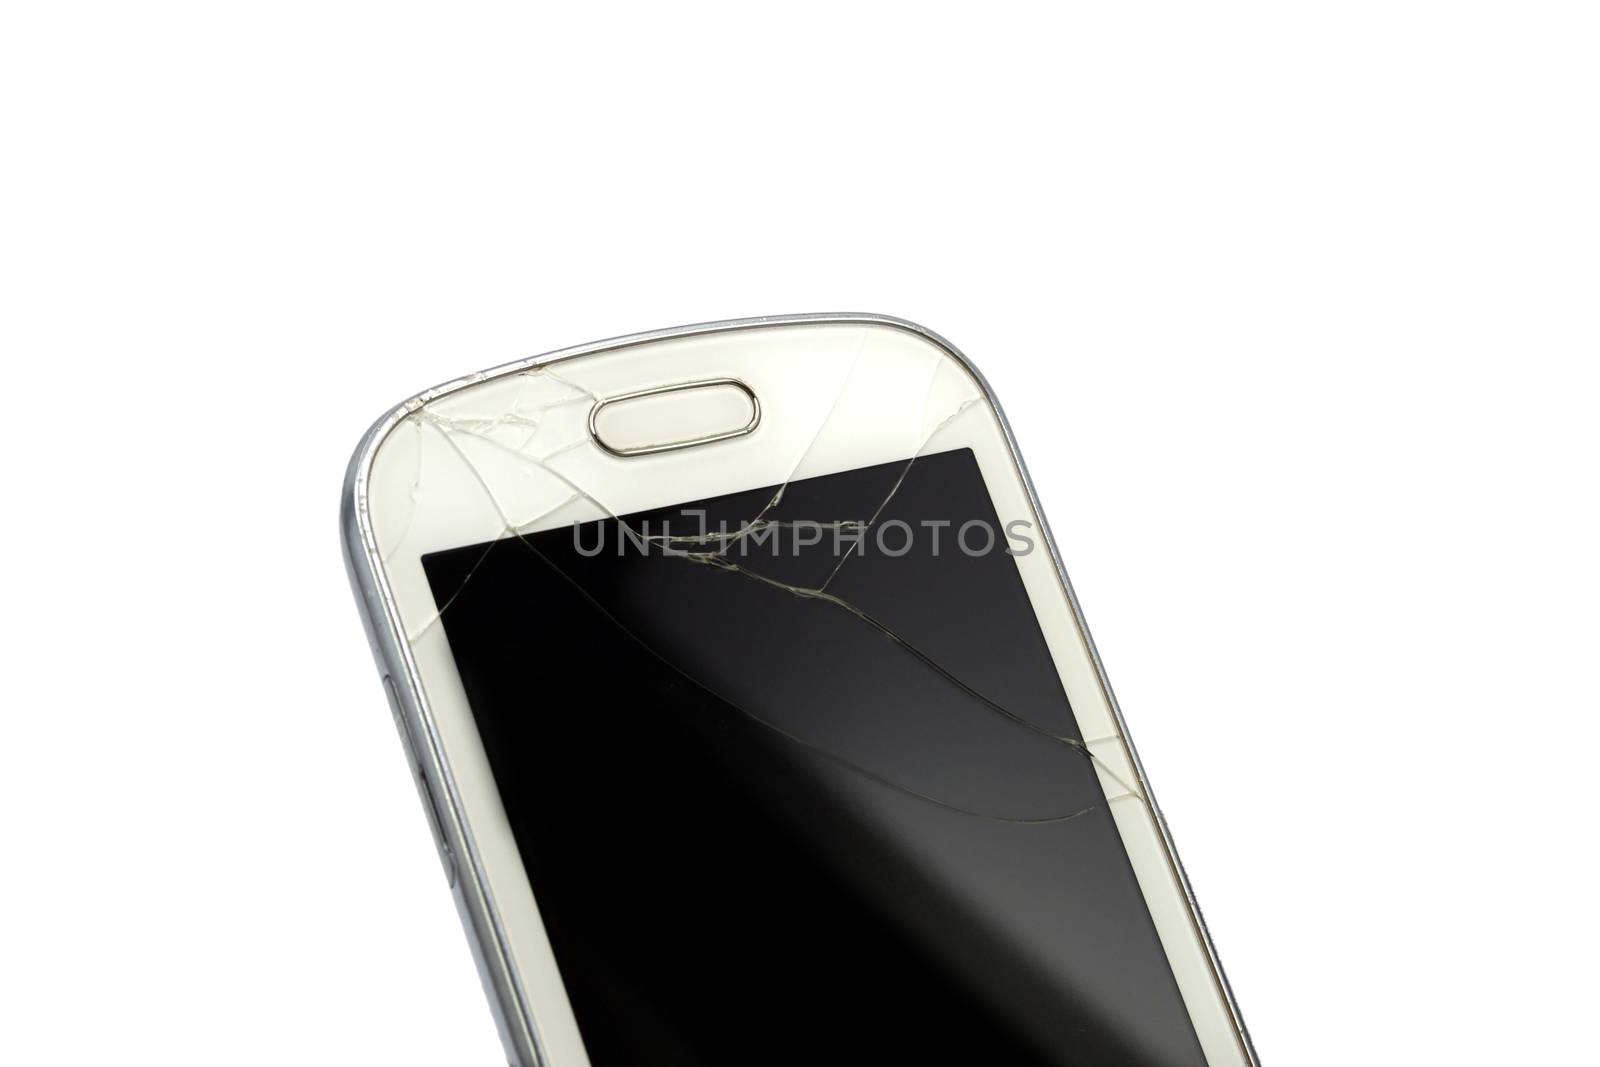 Broken smart phone isolated on white background by mranucha